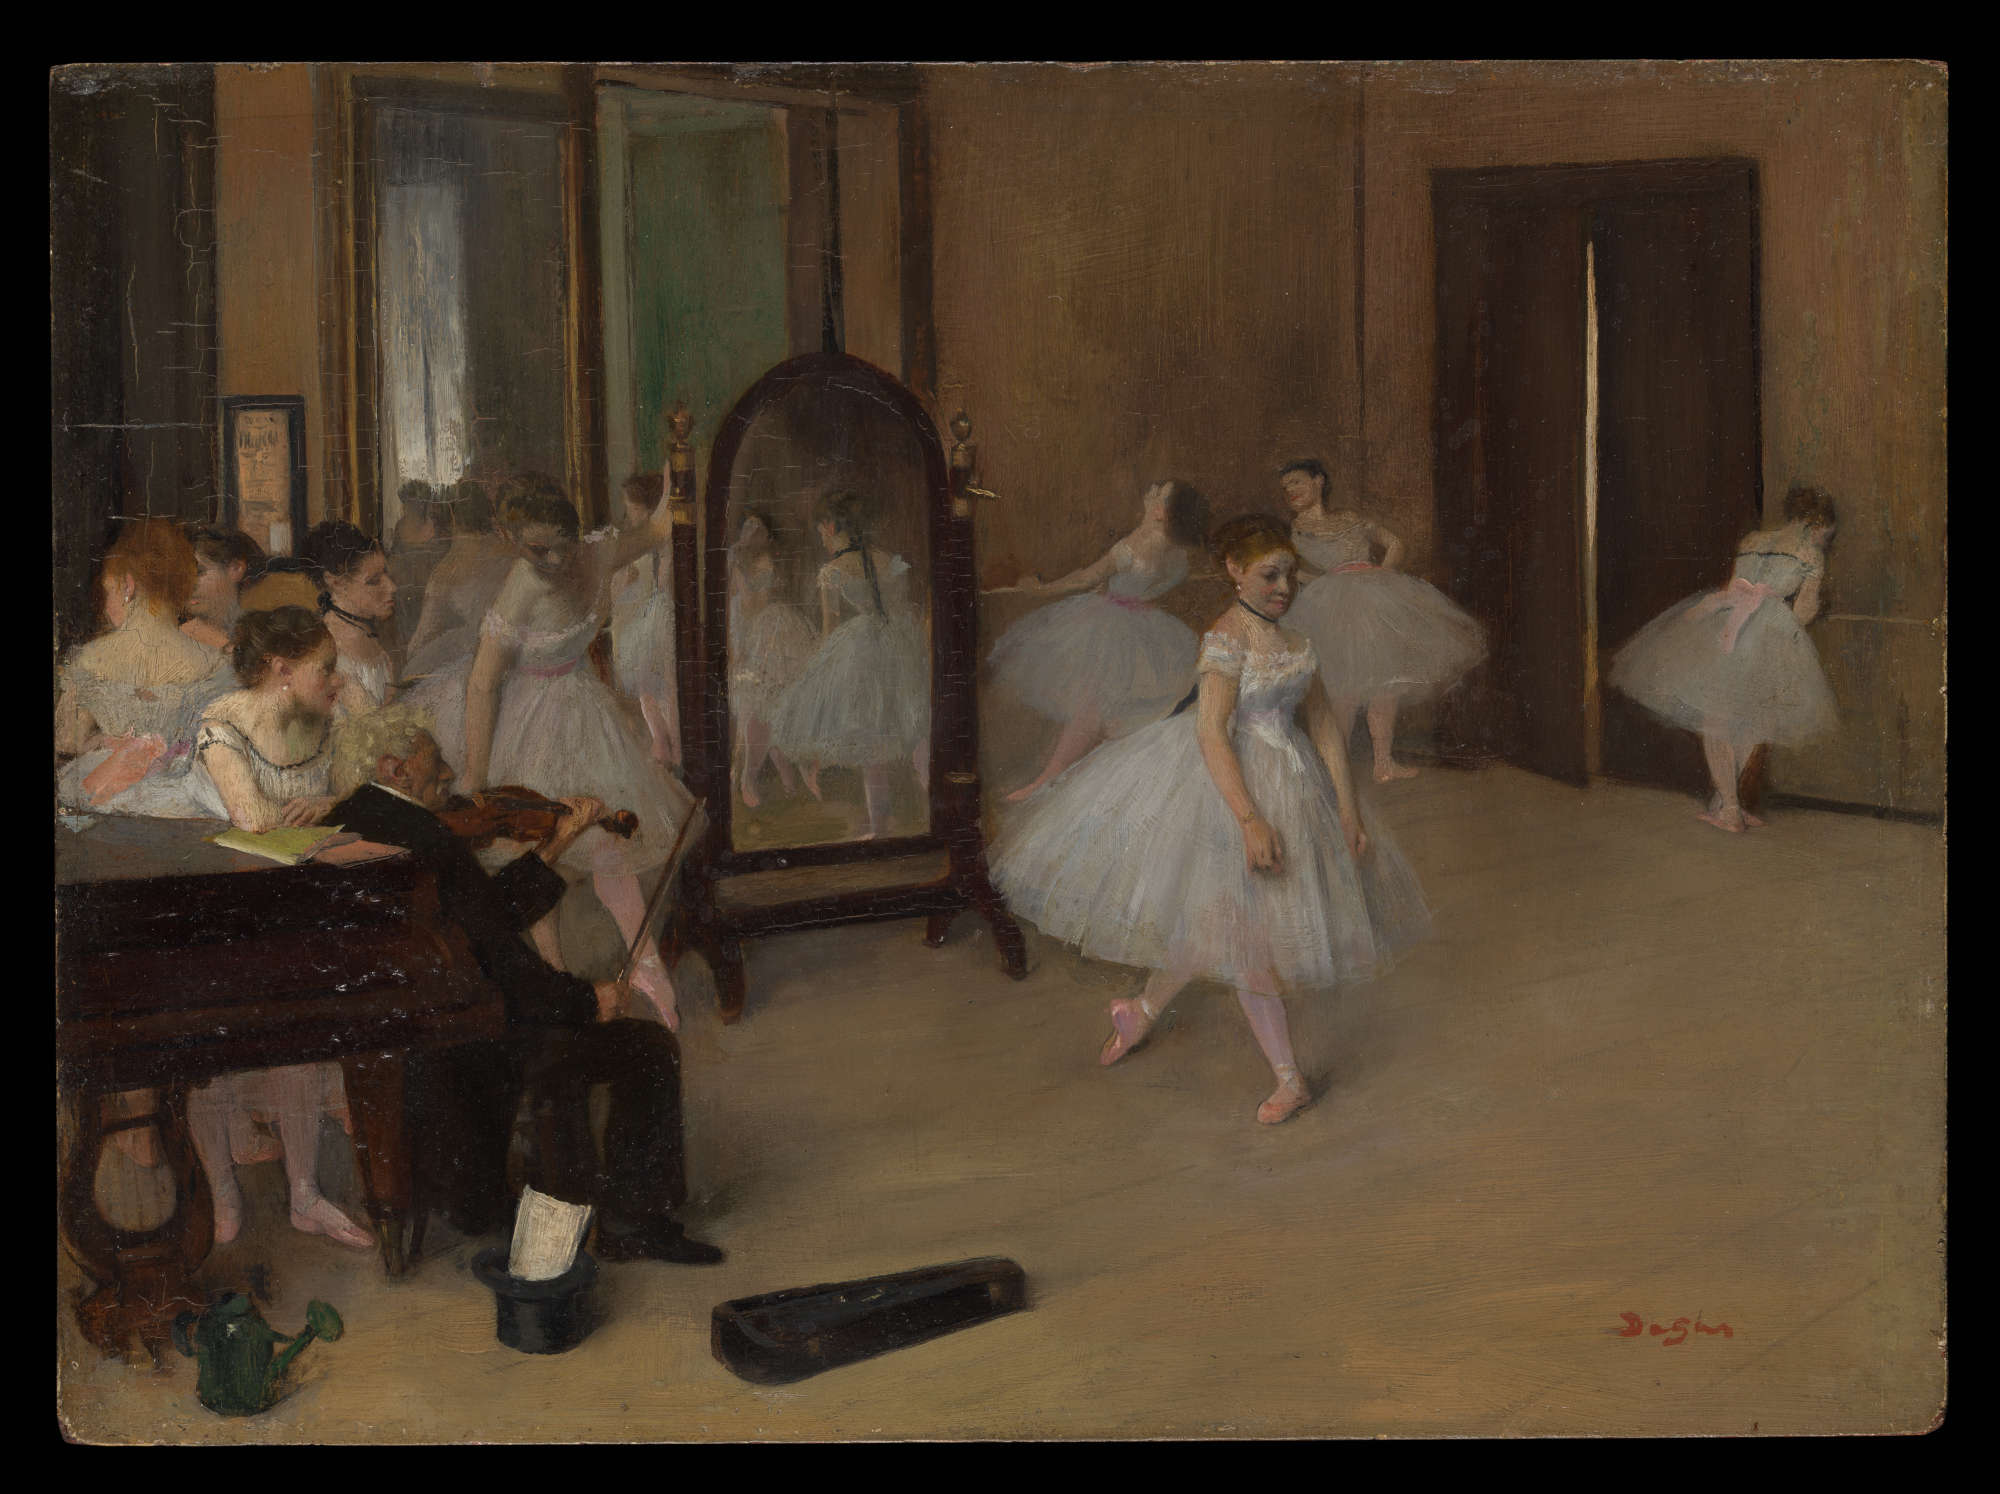 Edgar Degas, The Dancing Lesson (ca. 1870; oil on panel, 19.7 x 27 cm; New York, The Metropolitan Museum of Art)